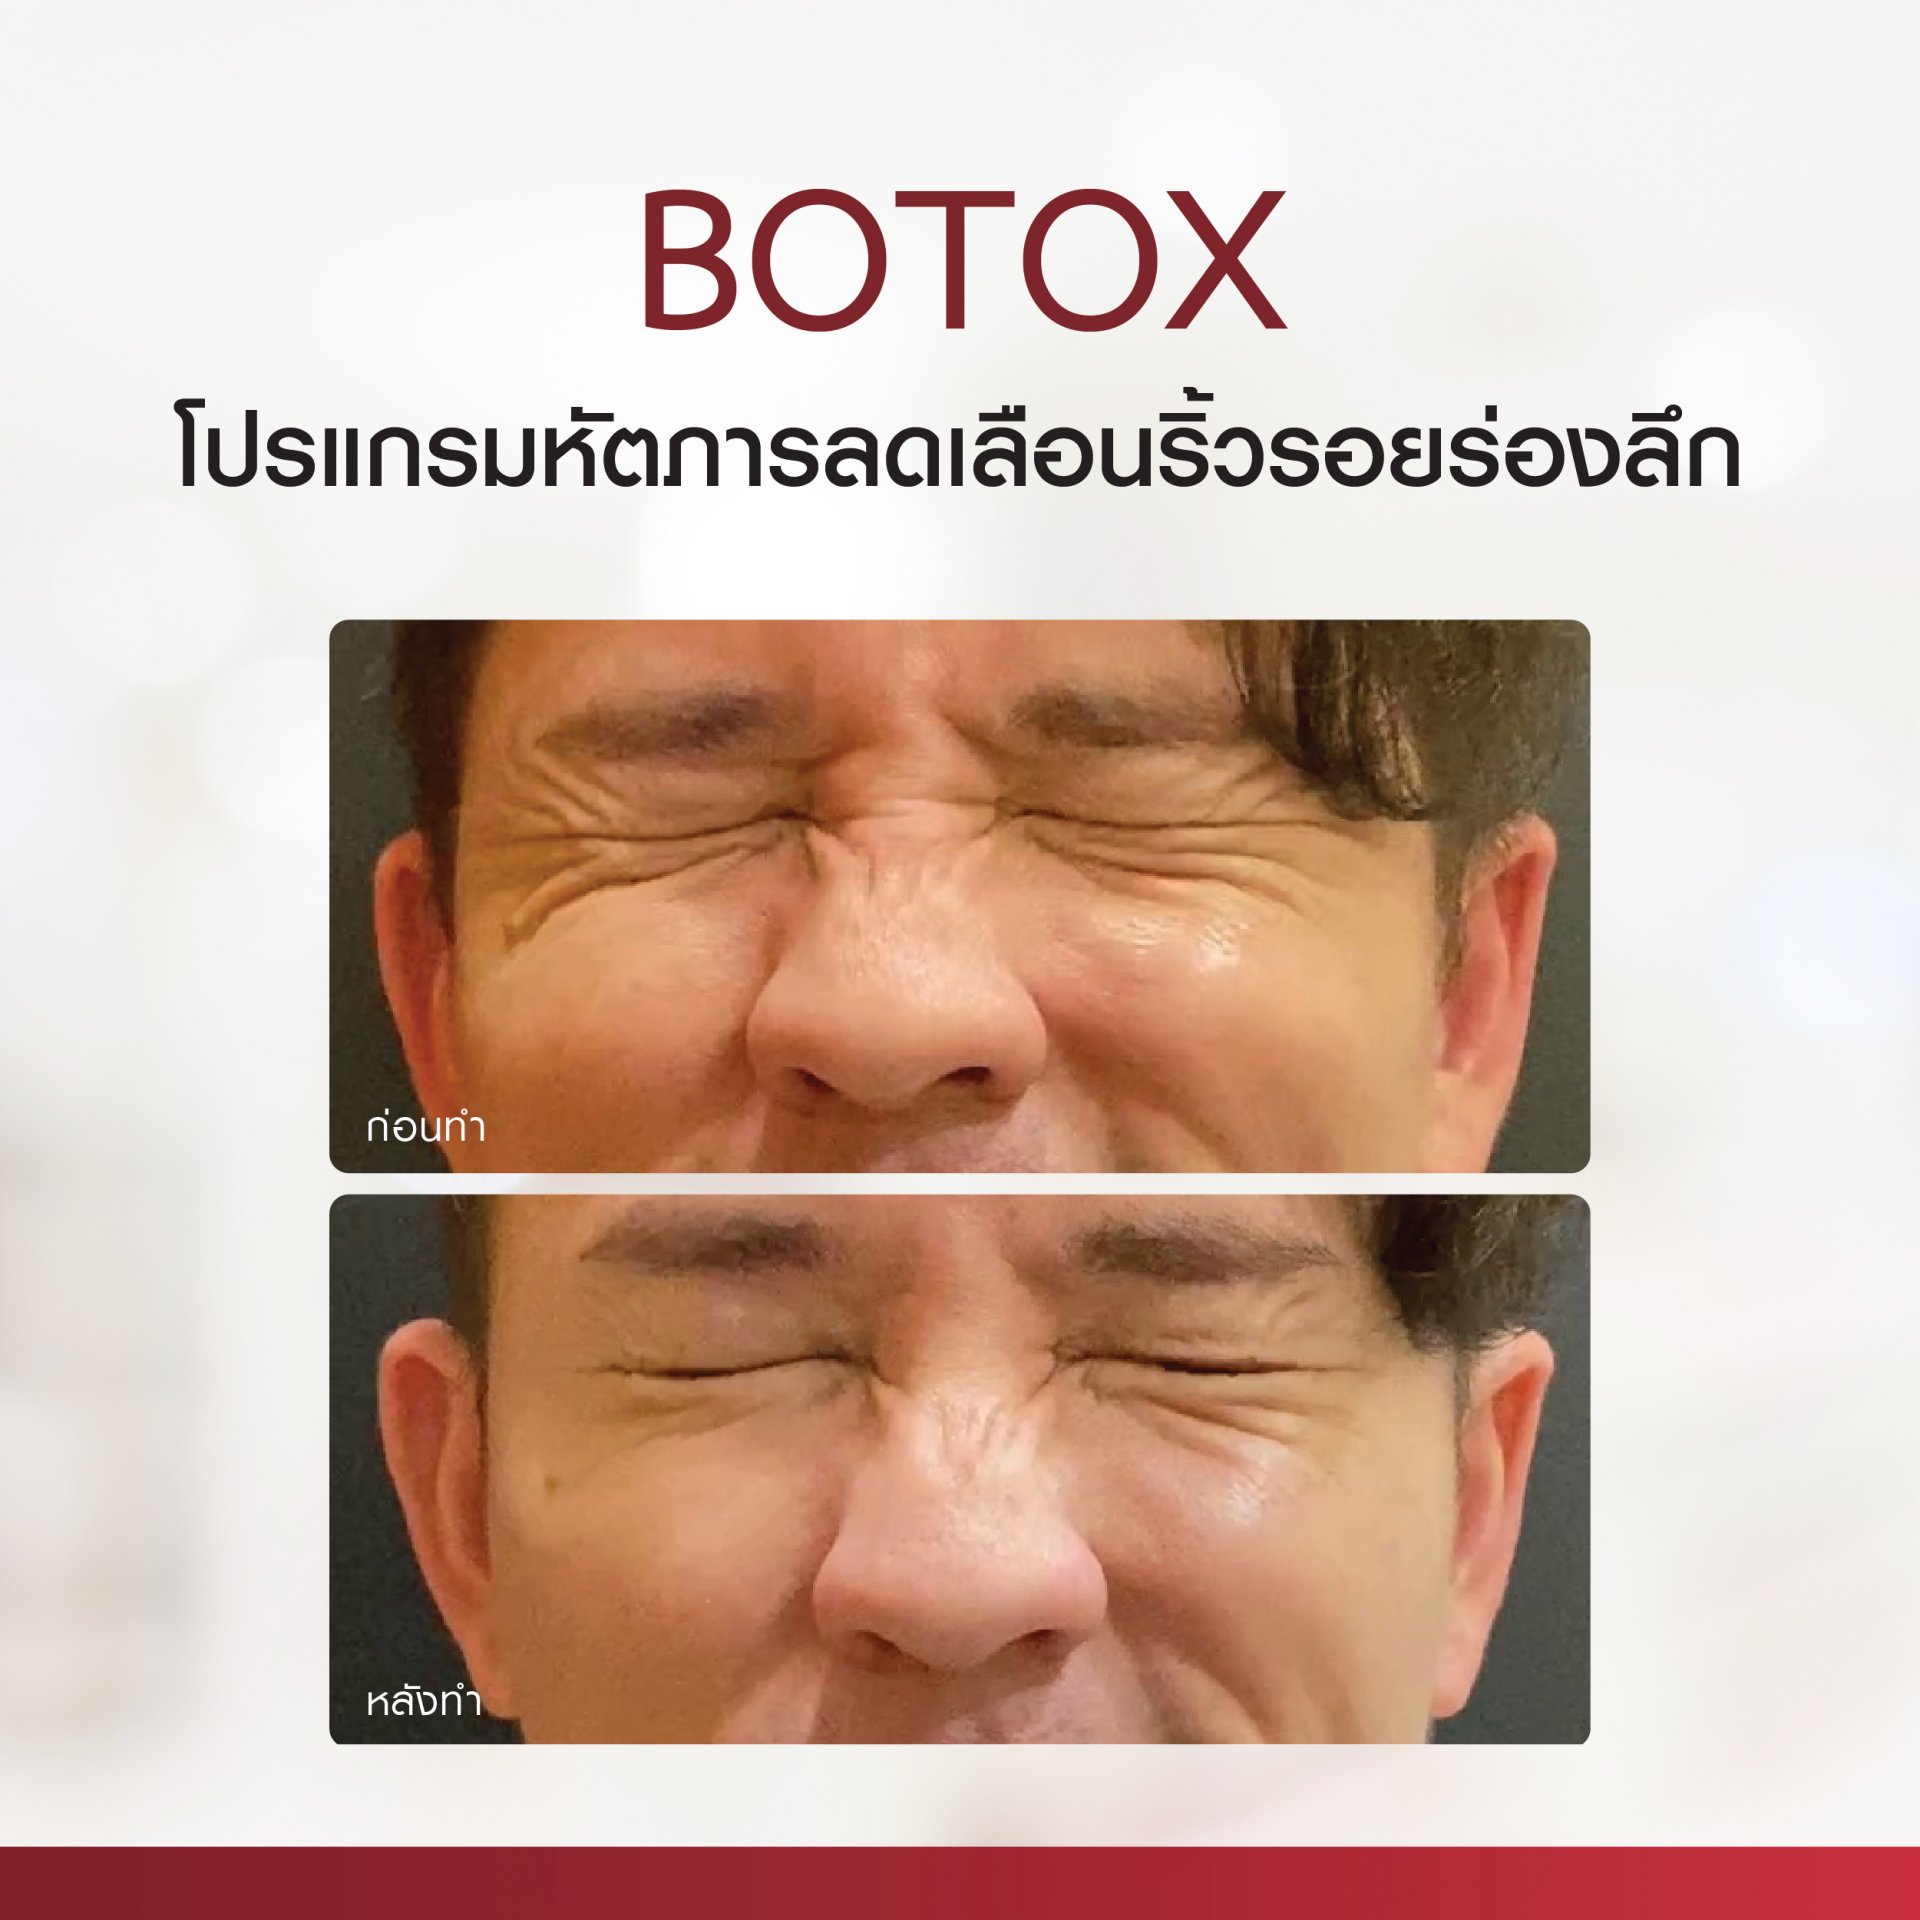 Review Botulinum Toxin